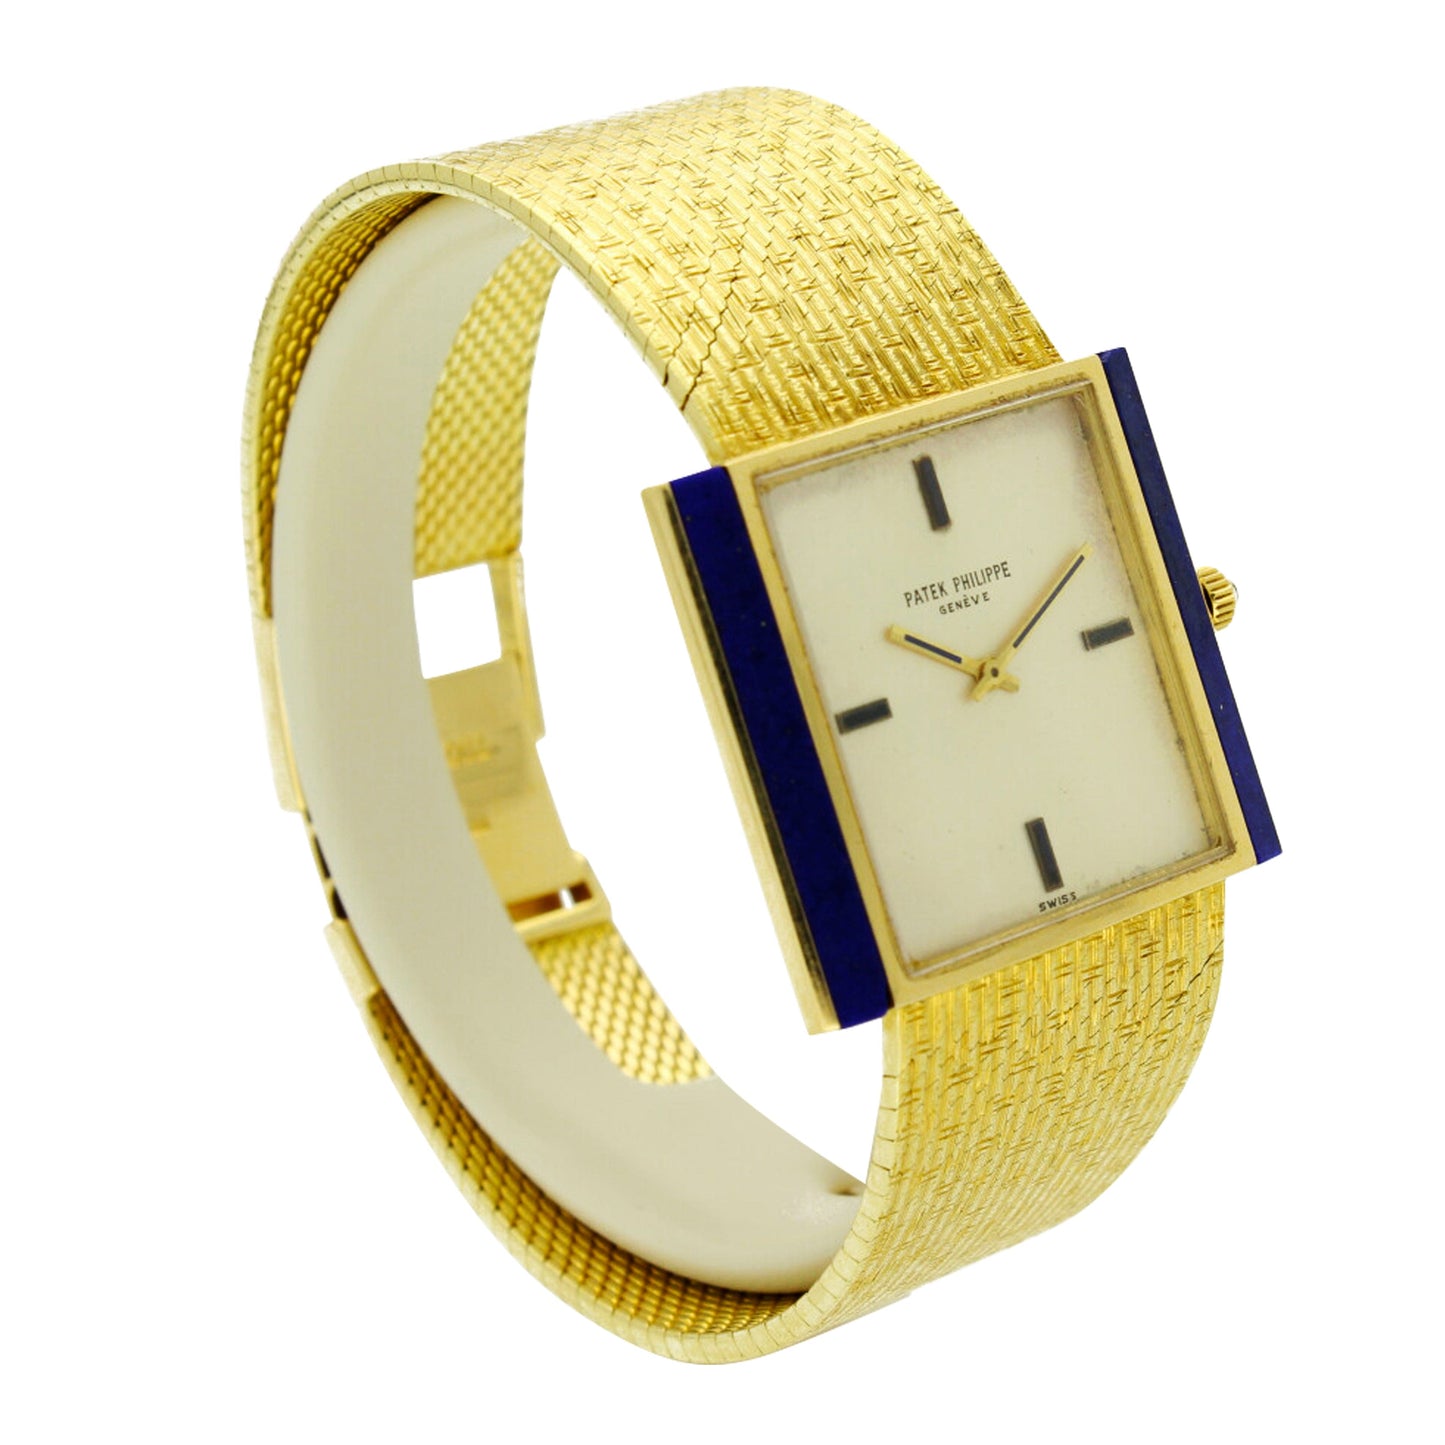 18ct yellow gold and lapis lazuli set, reference 3578/1 bracelet watch. Made 1976